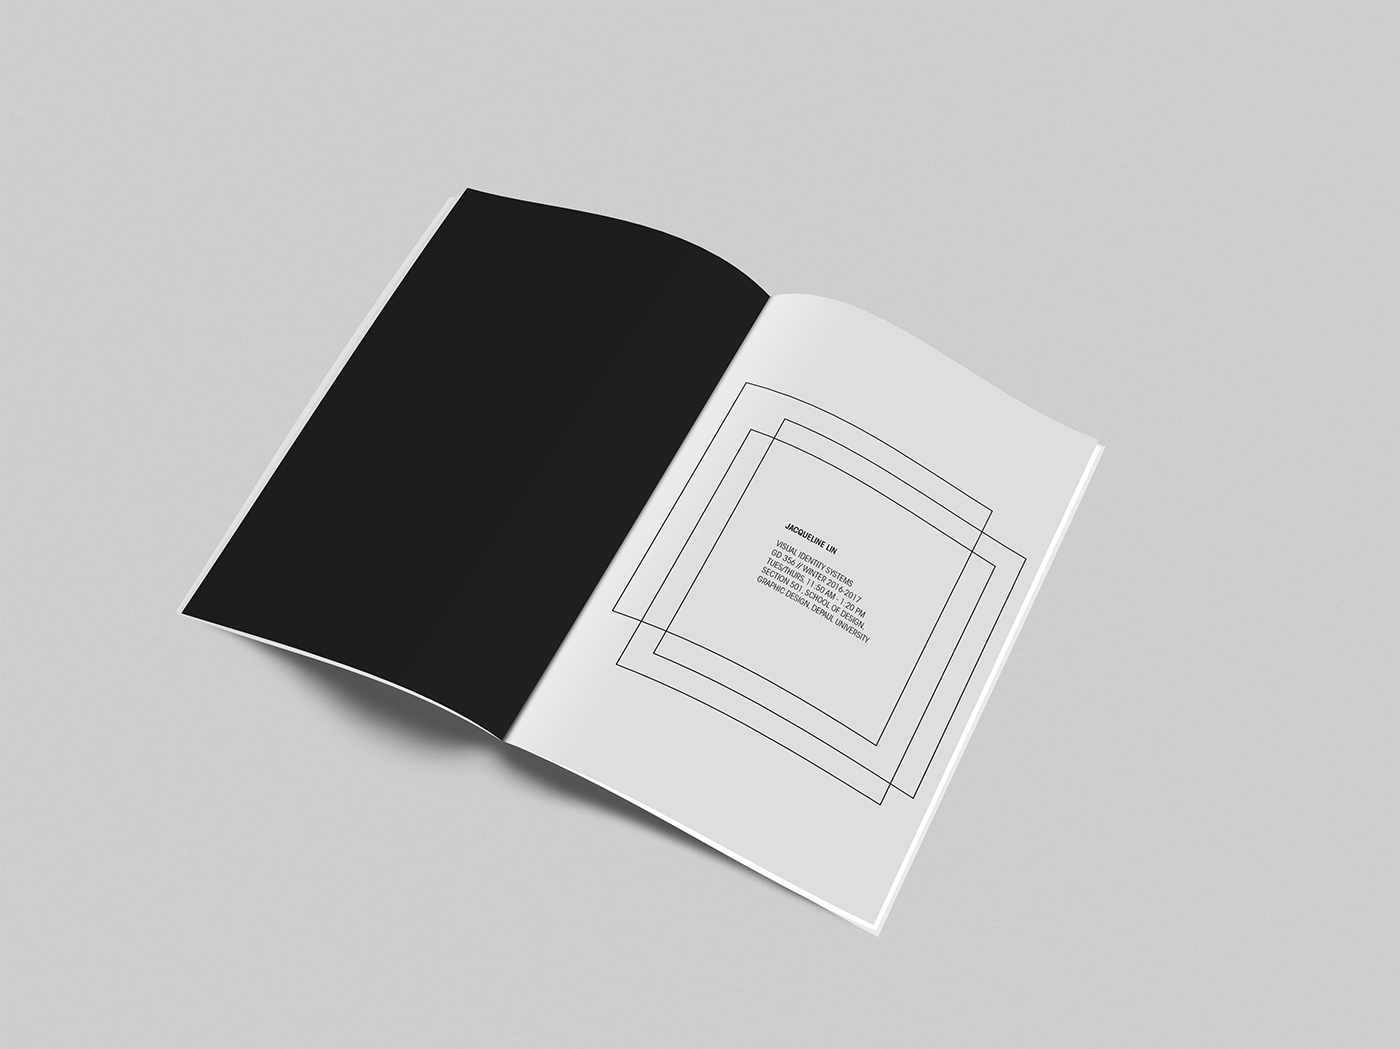 Adobe Portfolio graphicdesign ILLUSTRATION  book marks visualidentity brand research logo